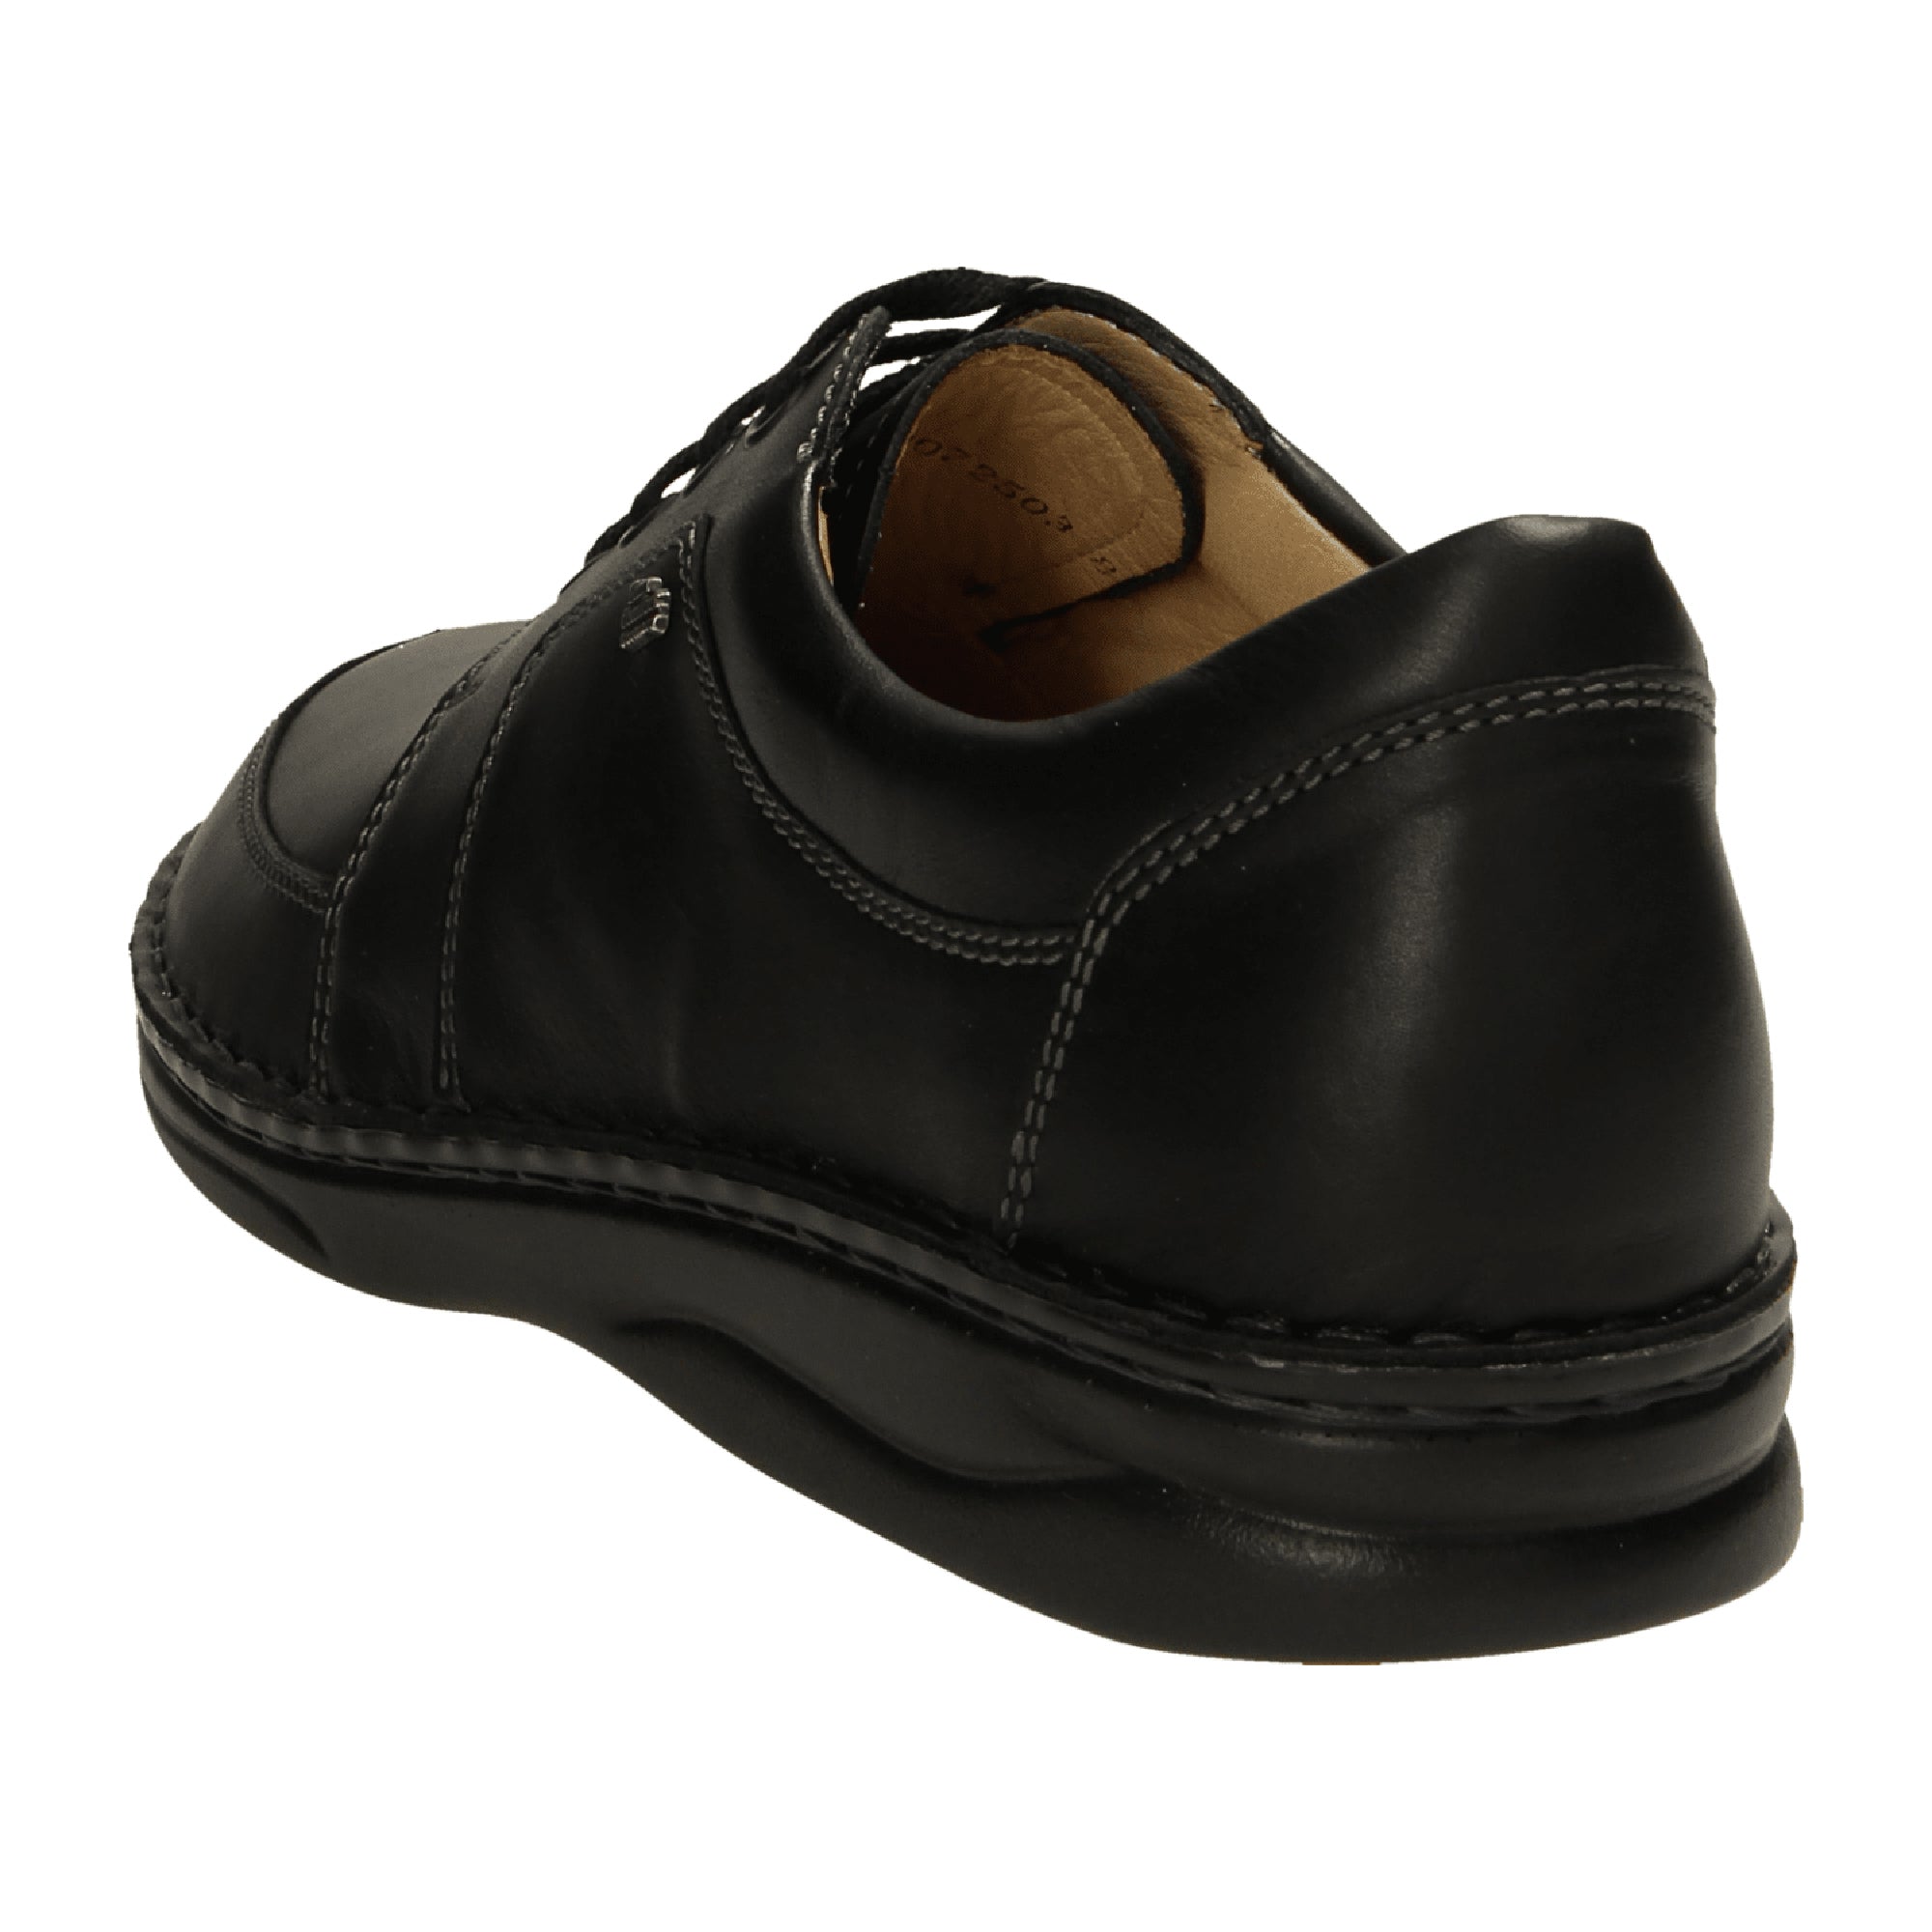 Finn Comfort Norwich Men's Black Shoes - Stylish & Durable Comfort Footwear